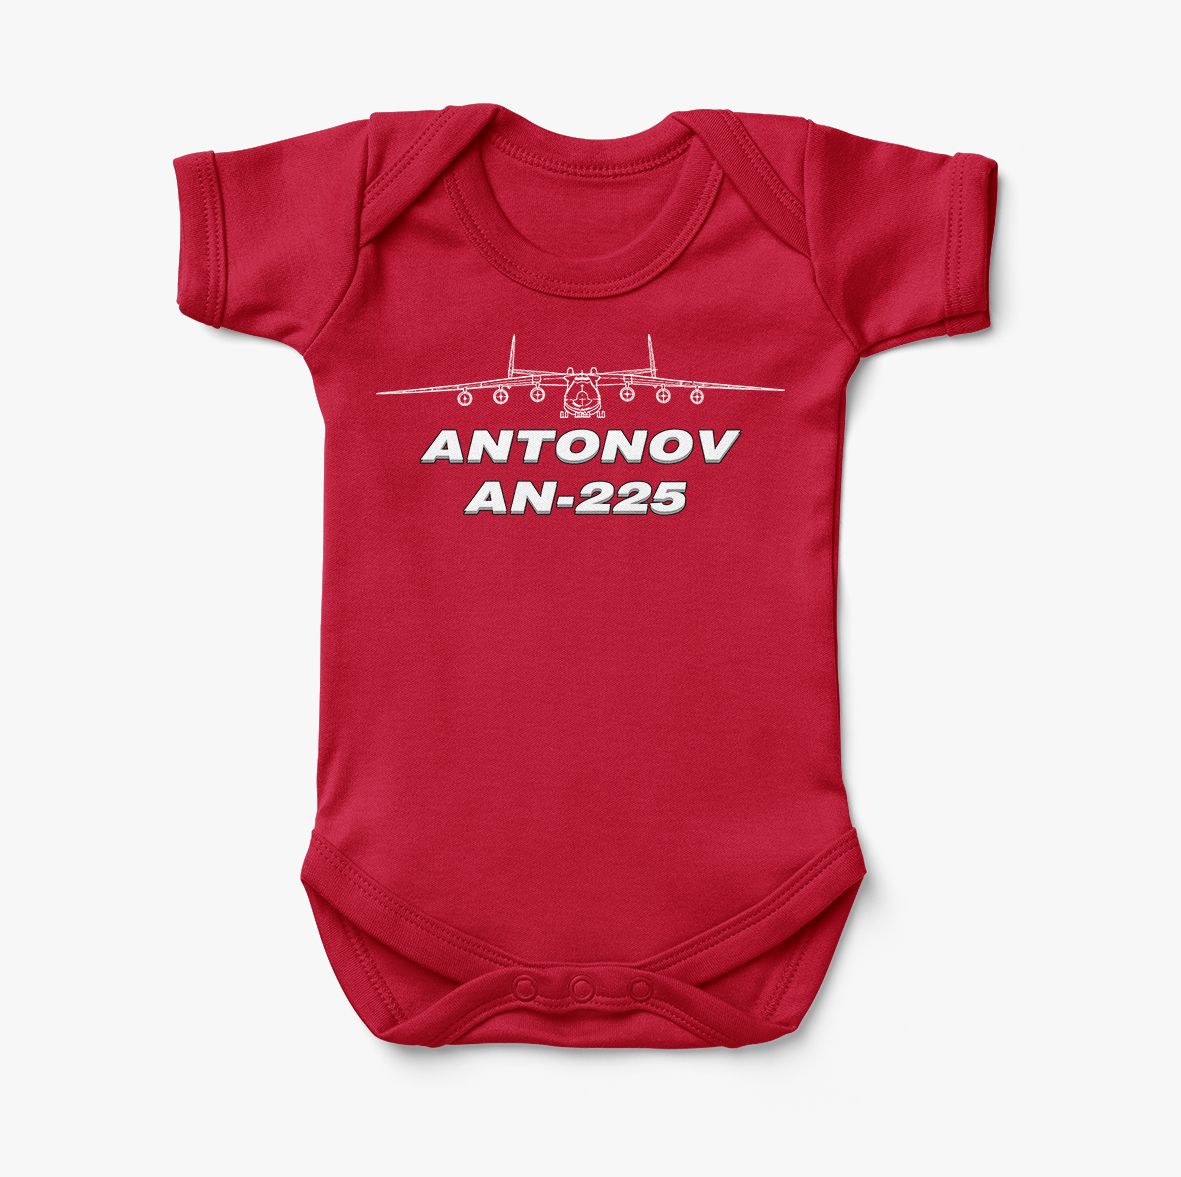 Antonov AN-225 (26) Designed Baby Bodysuits